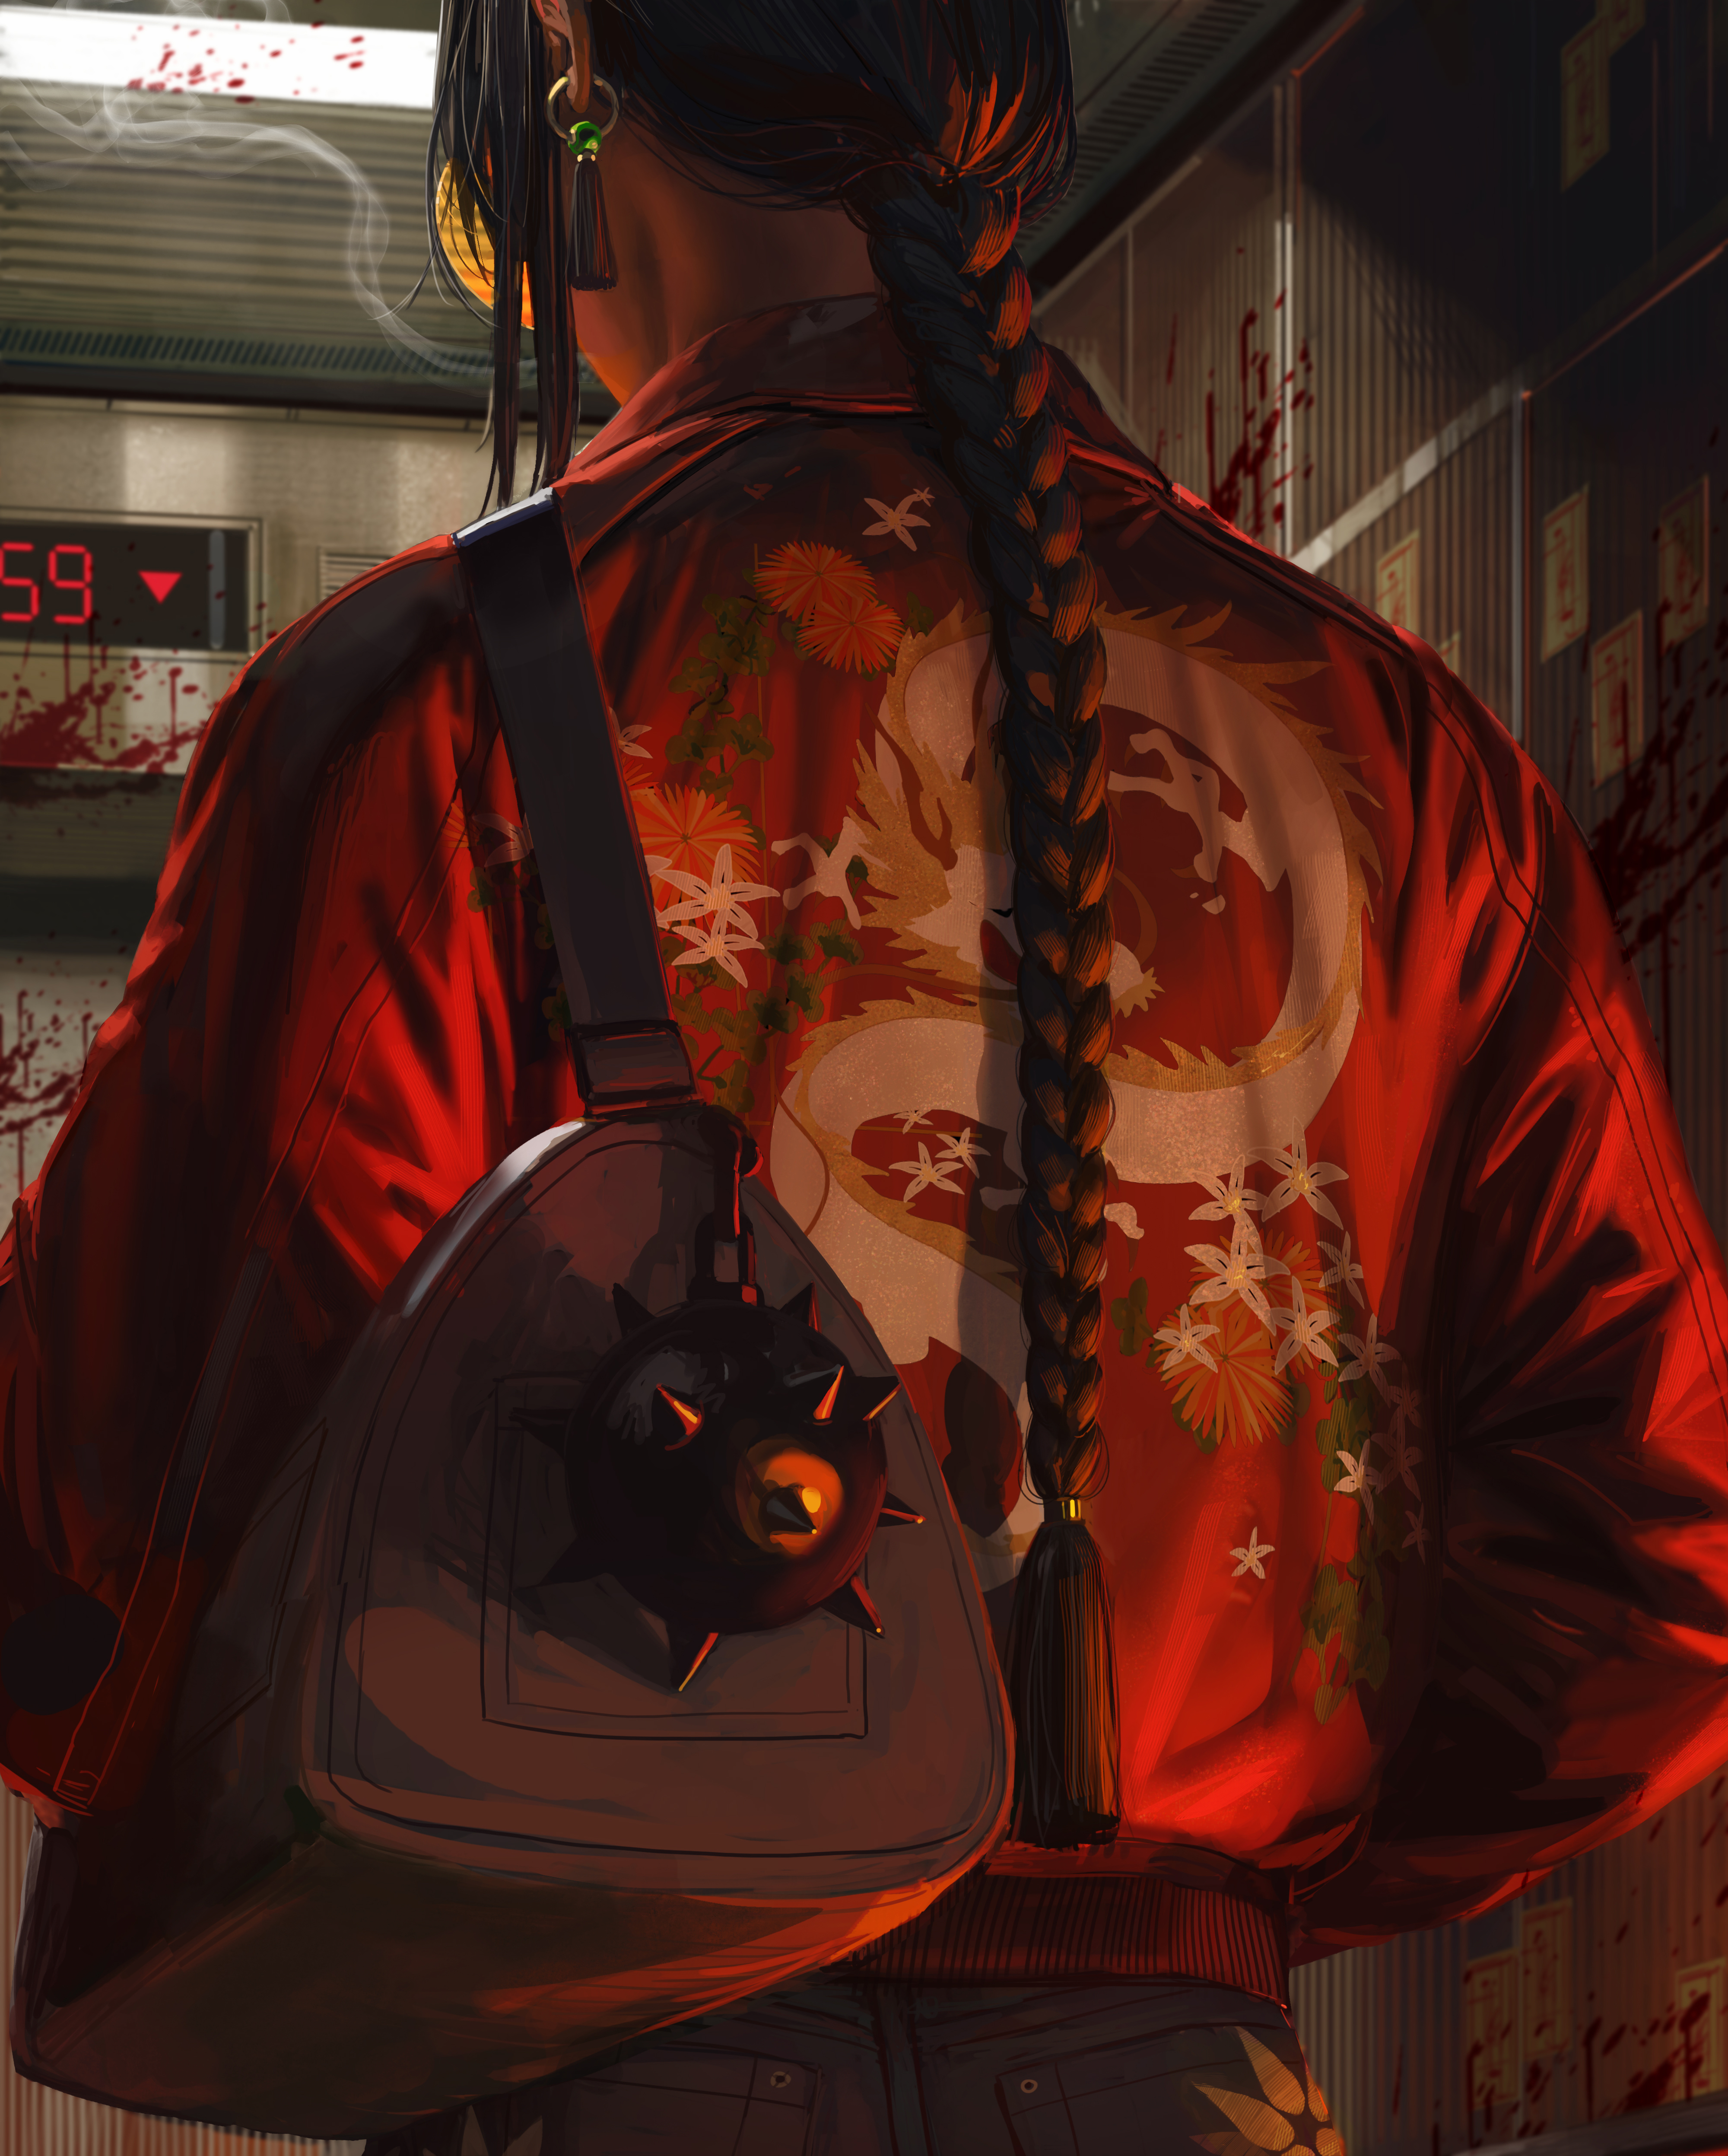 General 4000x4990 digital art artwork illustration women long hair dark hair details GUWEIZ portrait display smoke Chinese dragon bag red jackets braids